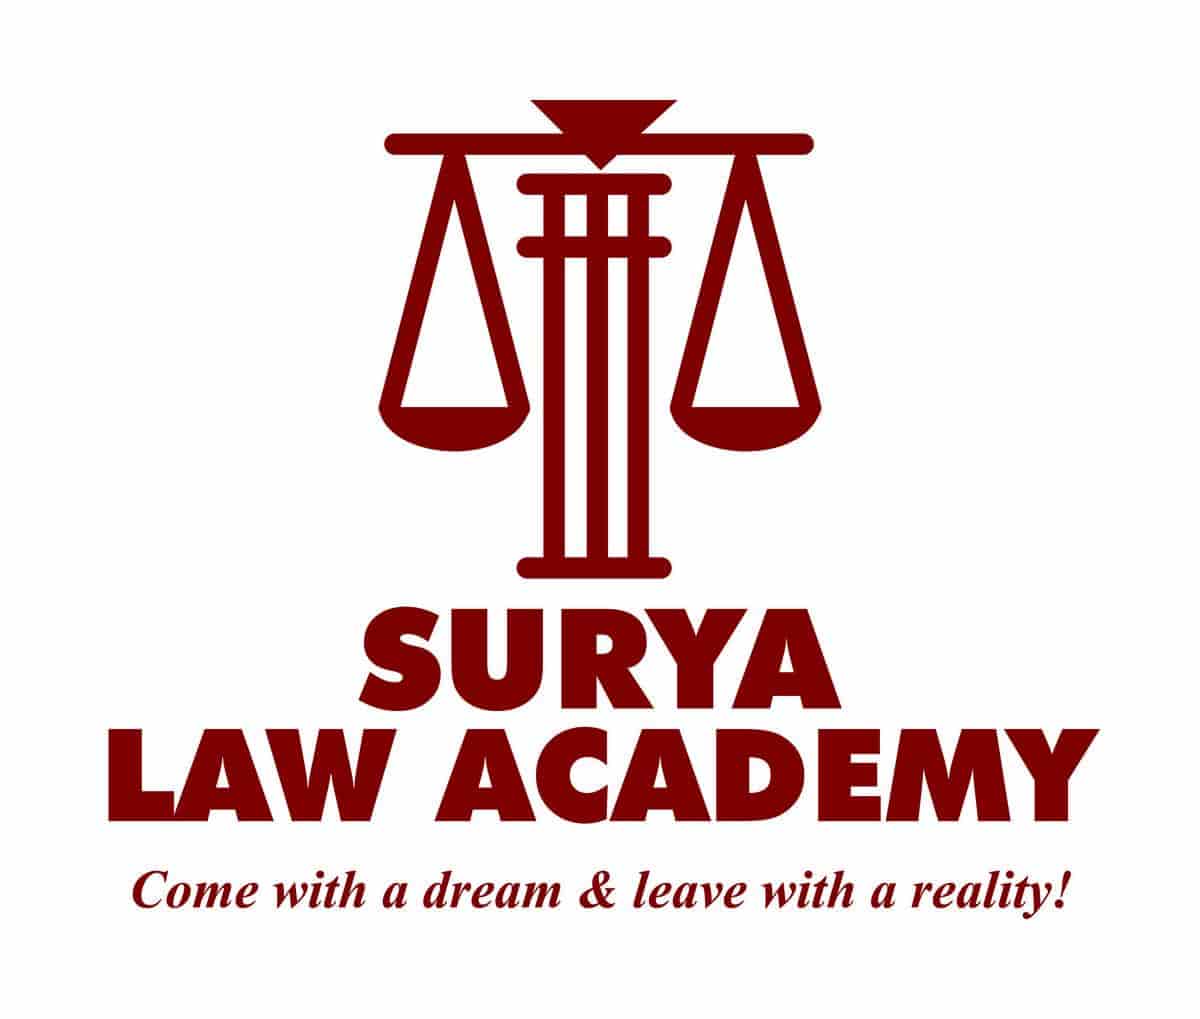 Surya Law Academy